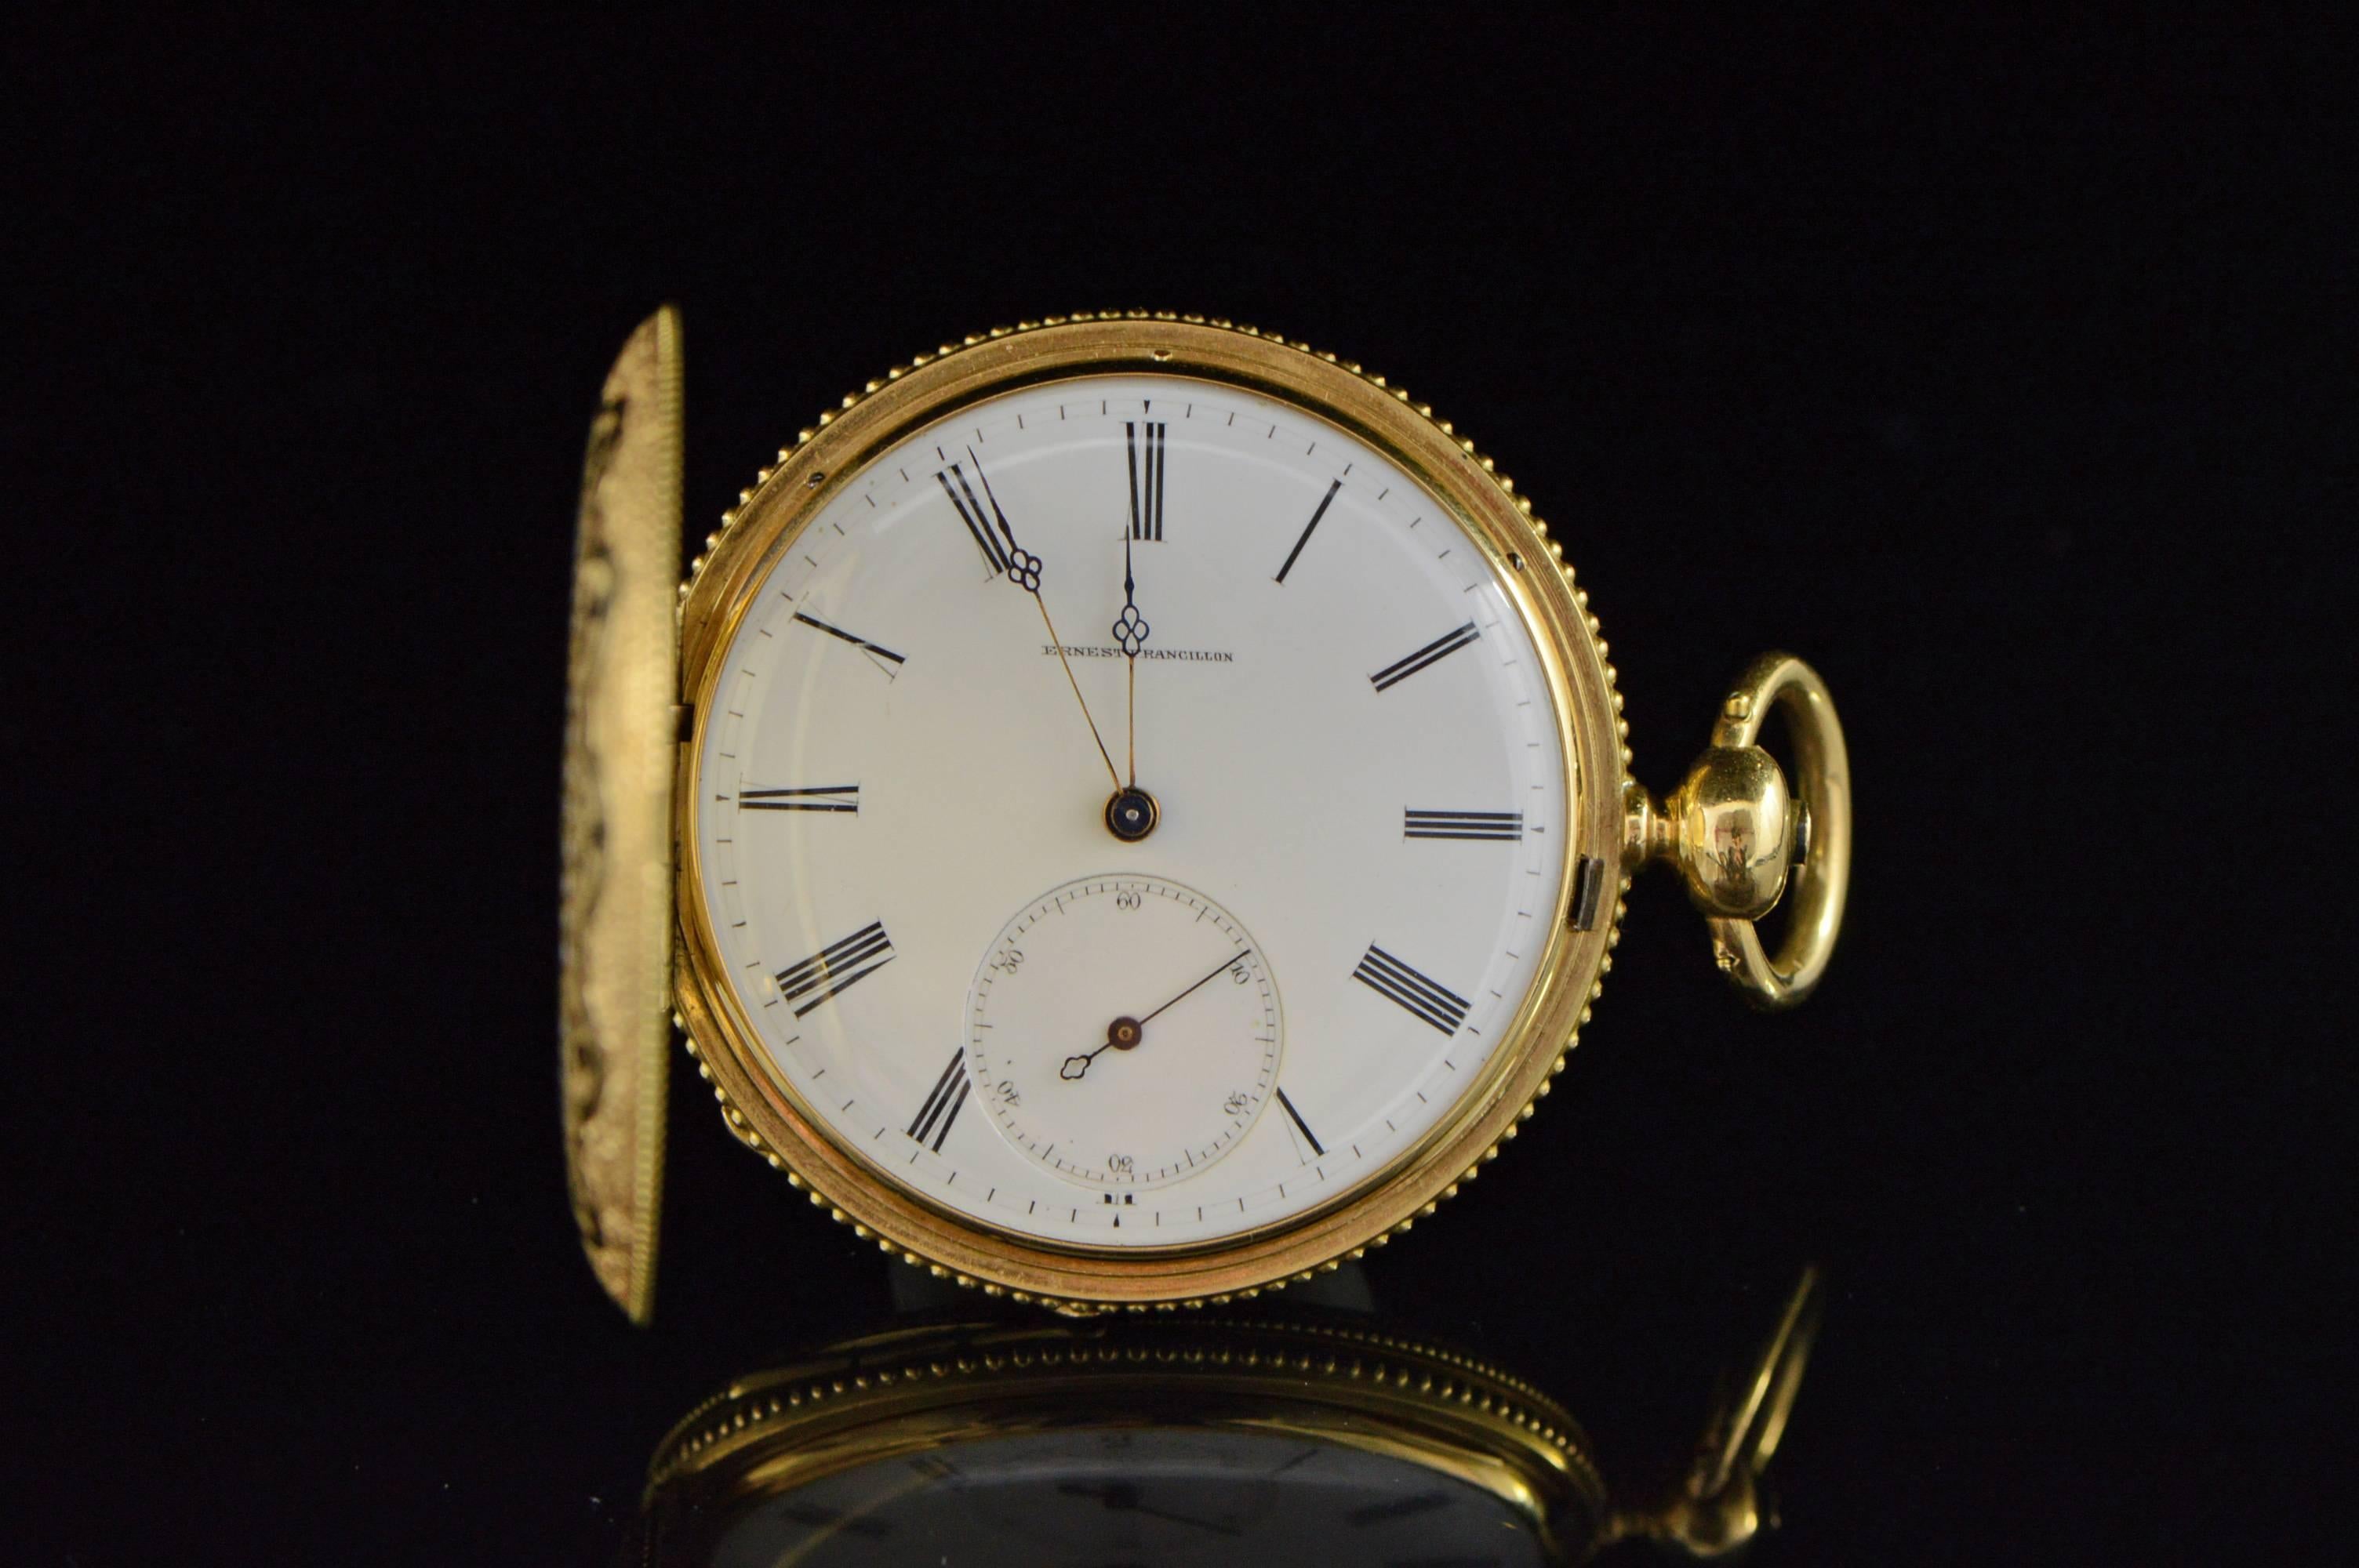 longines ernest francillon chronograph